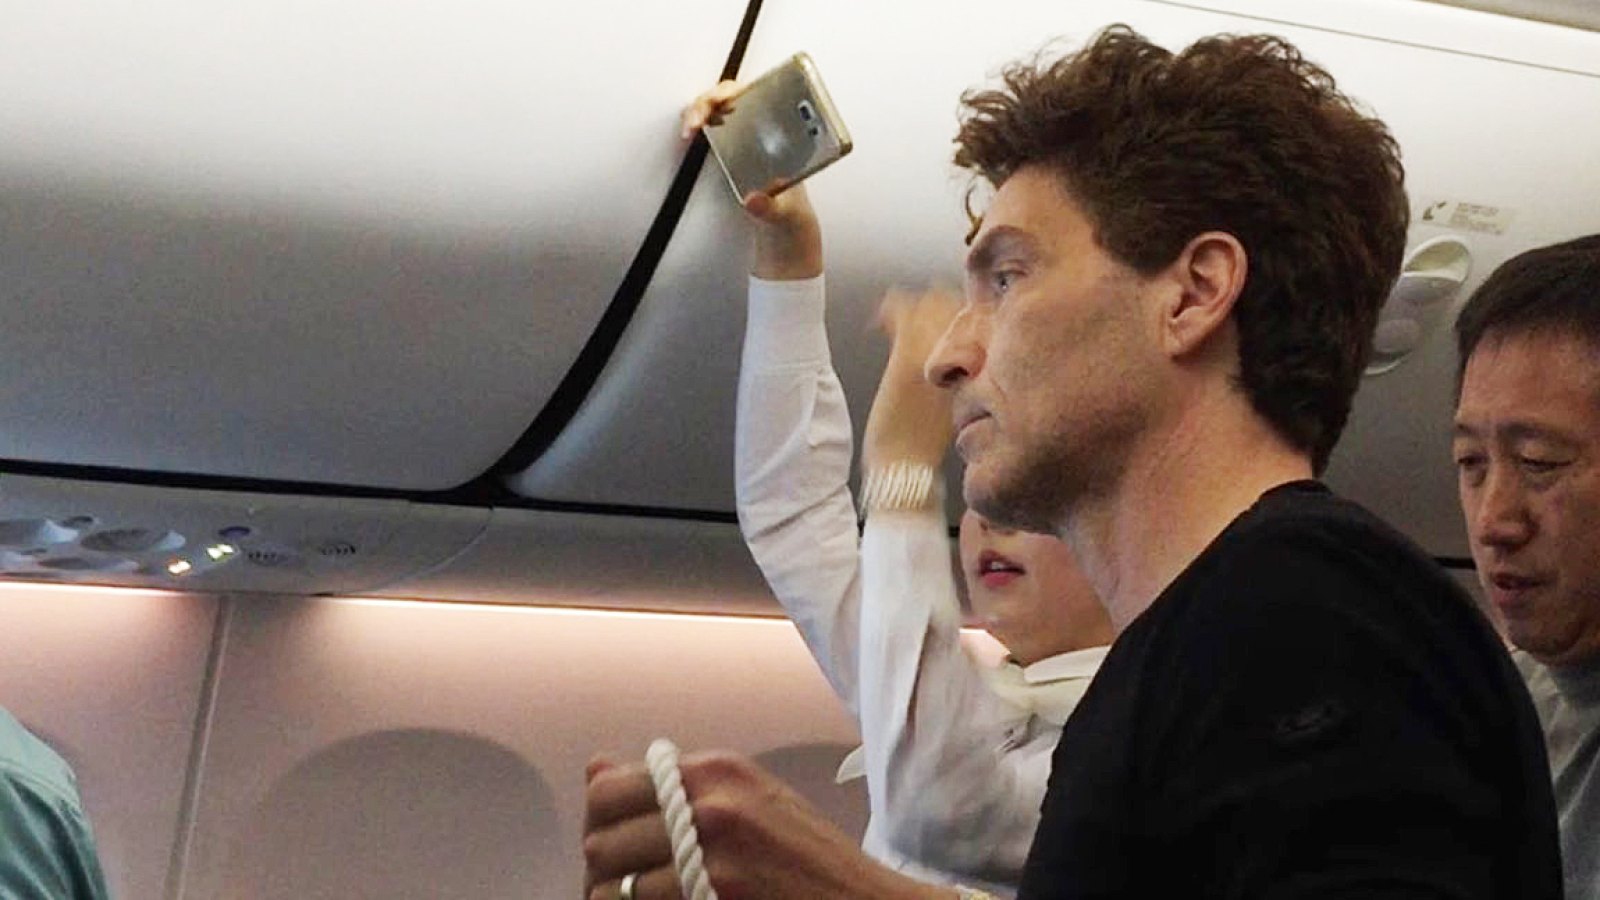 Richard Marx Restrains Unruly Passenger on Flight